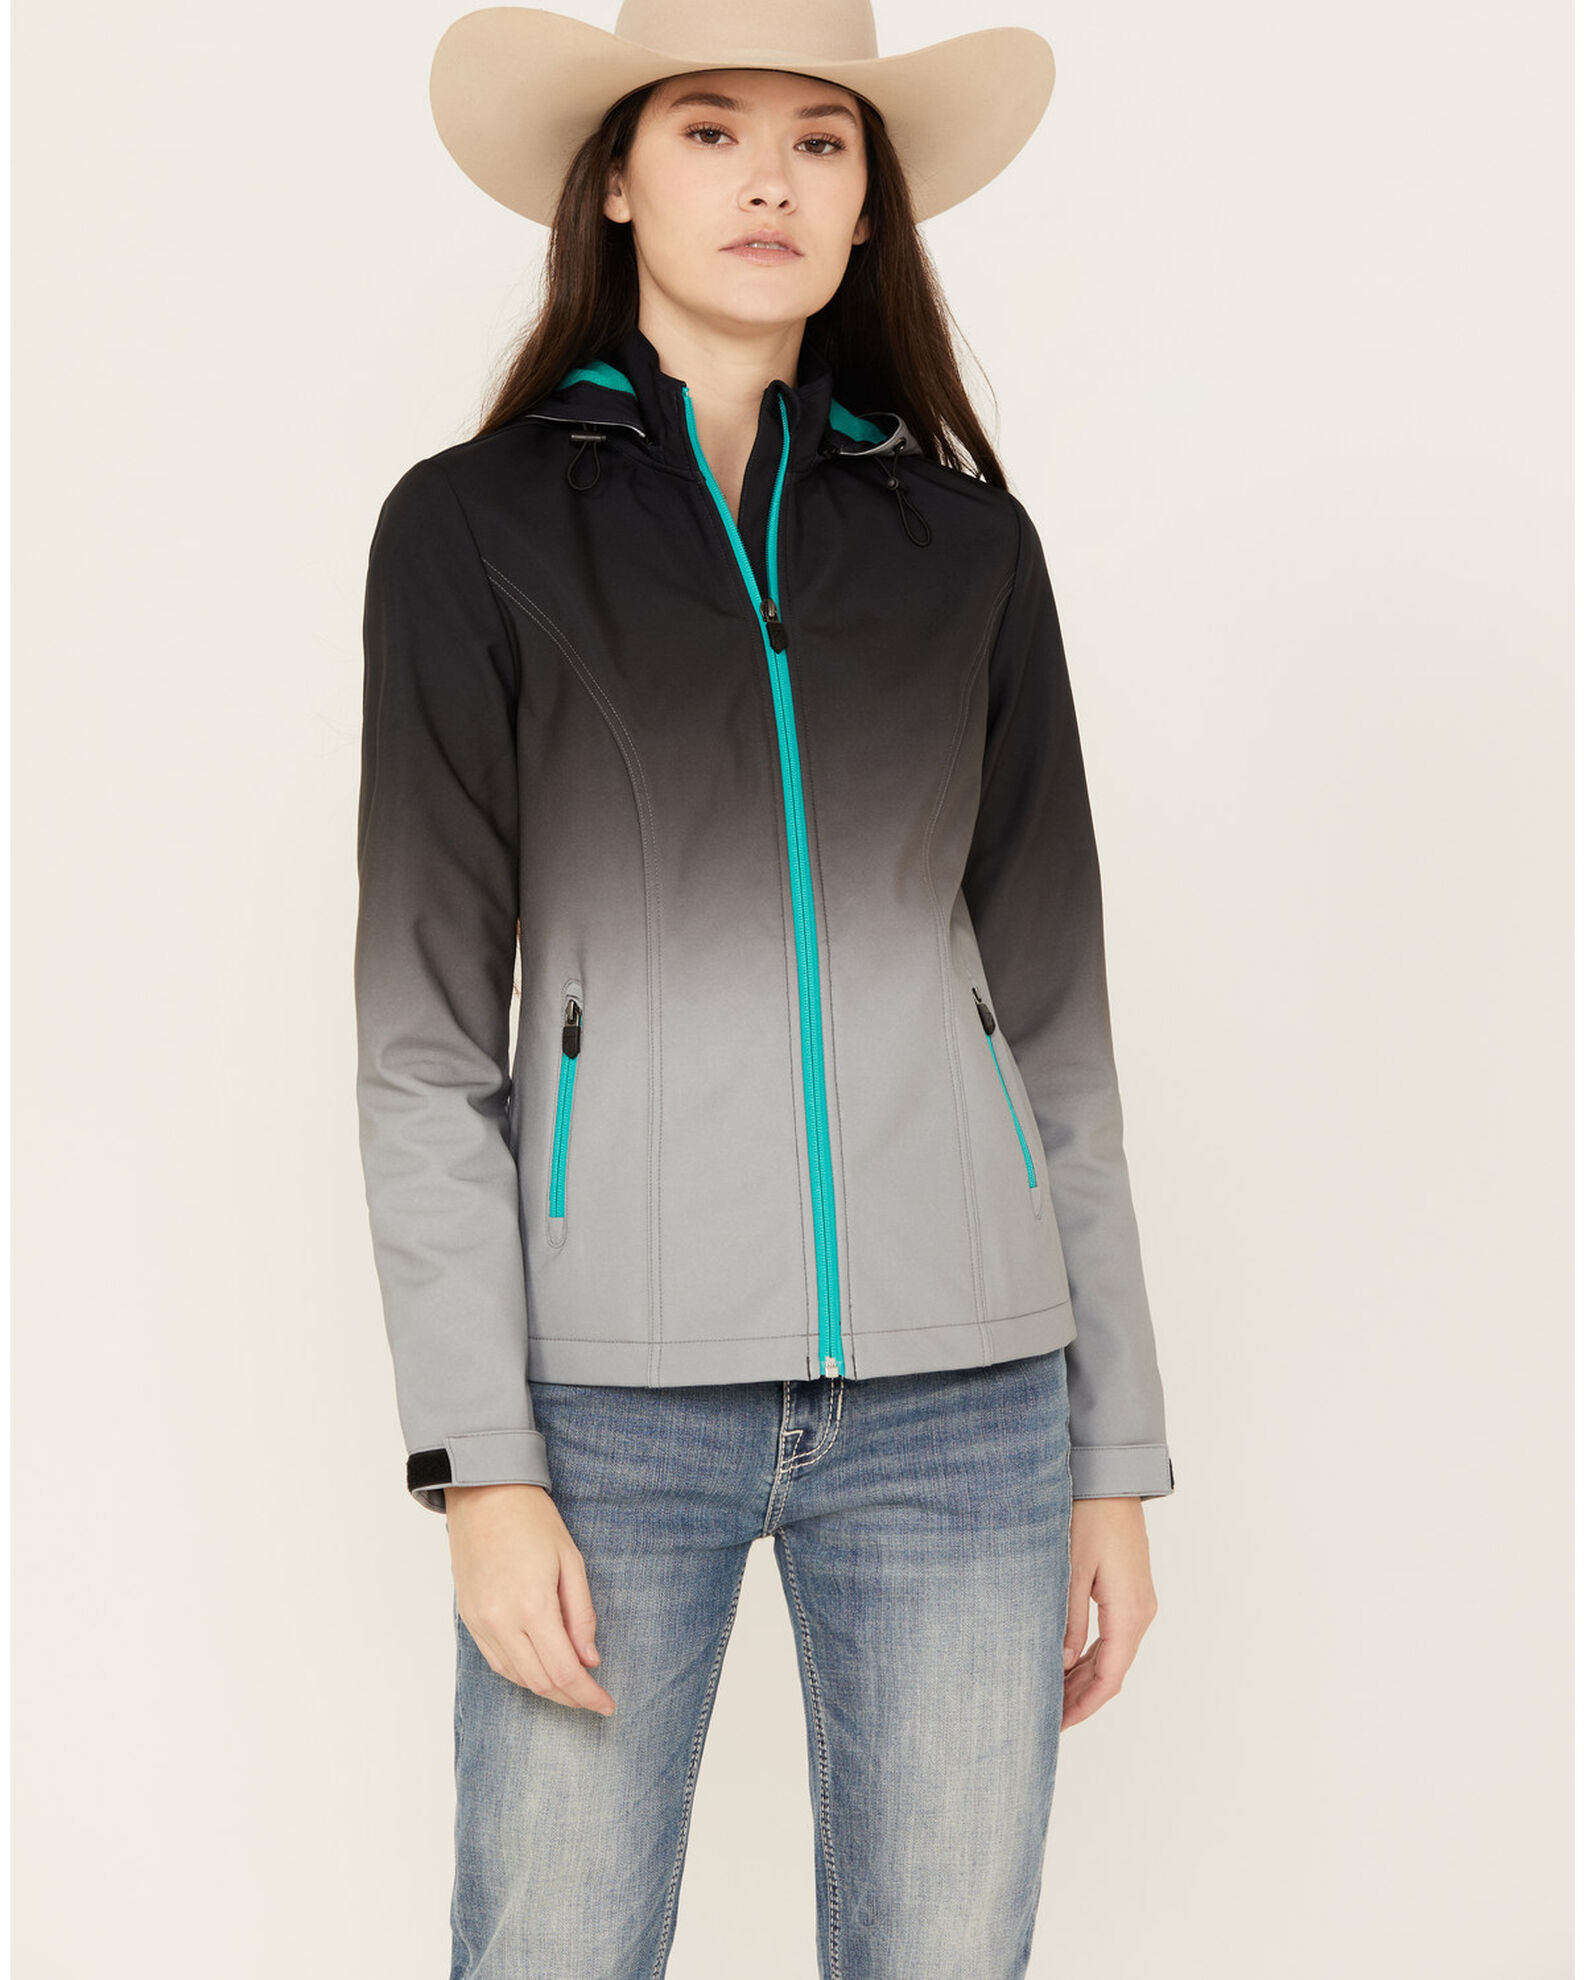 Product Name: RANK 45® Women's Ombre Melange Softshell Jacket